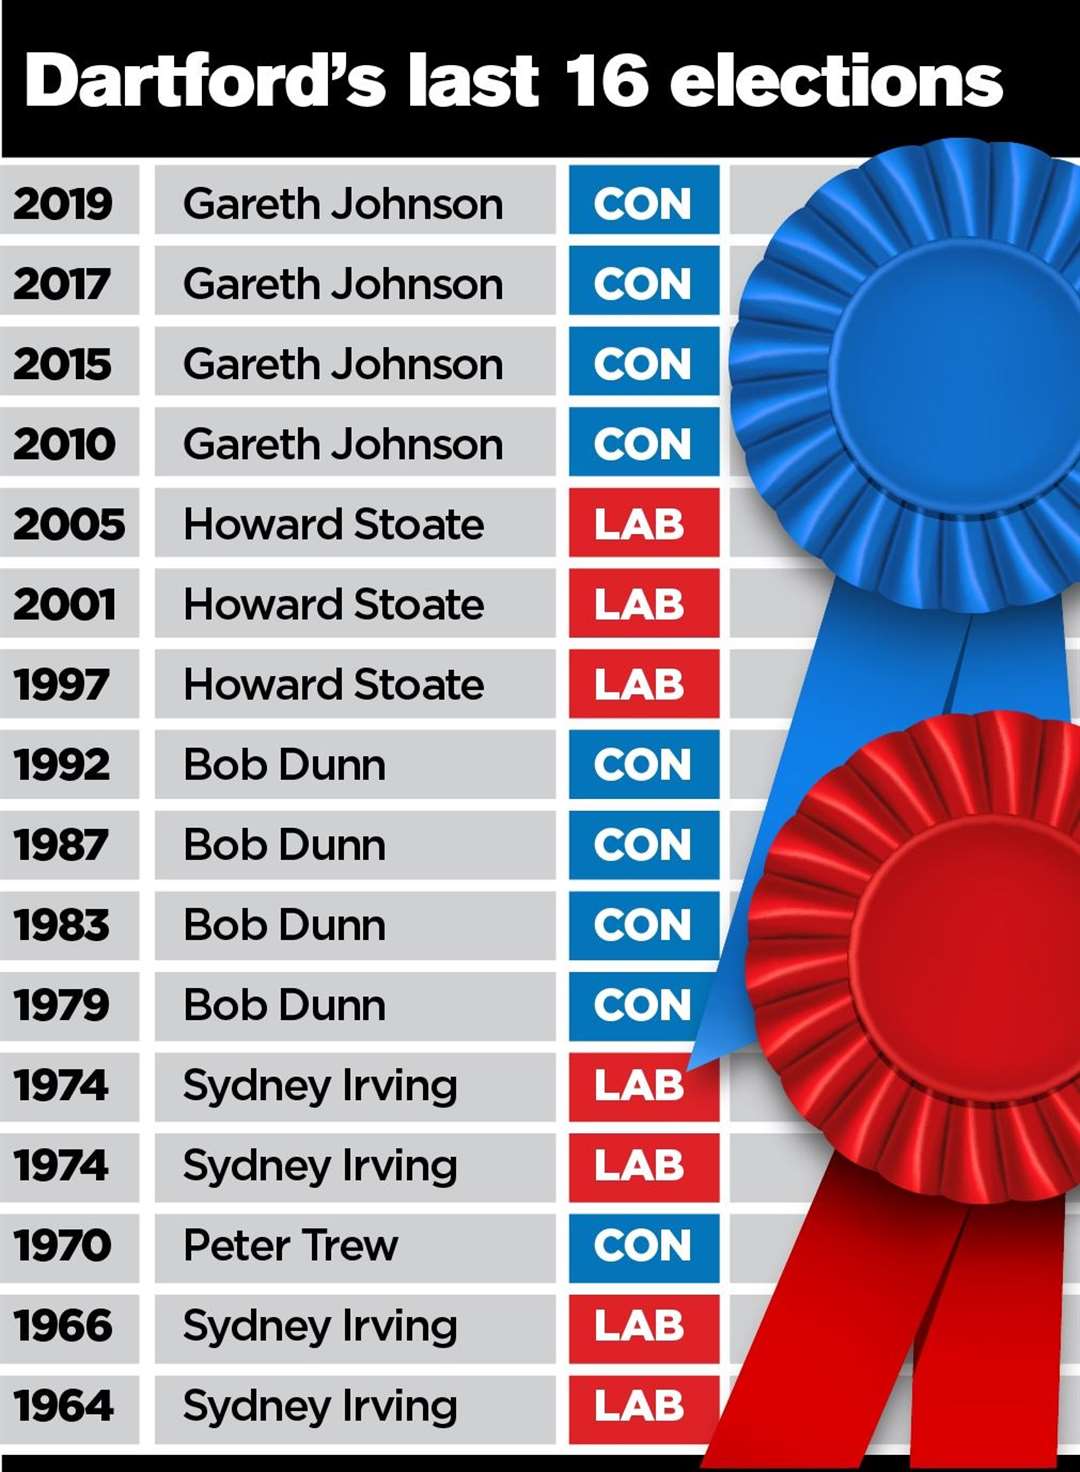 Dartford election results since 1964